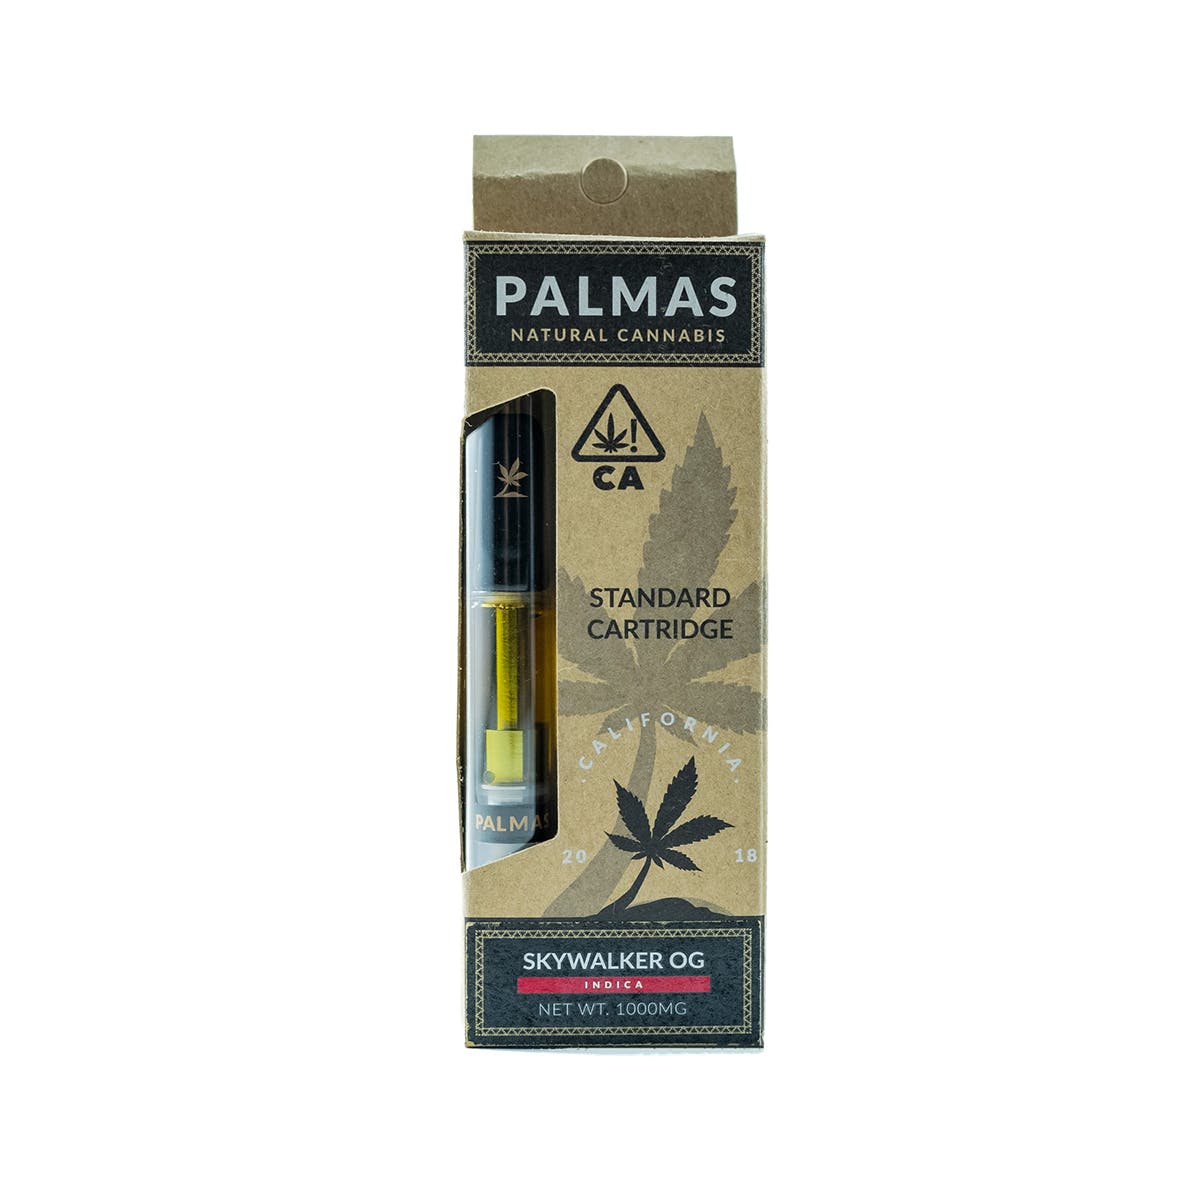 marijuana-dispensaries-gold-20-cap-collective-in-los-angeles-palmas-standard-cartridge-skywalker-og